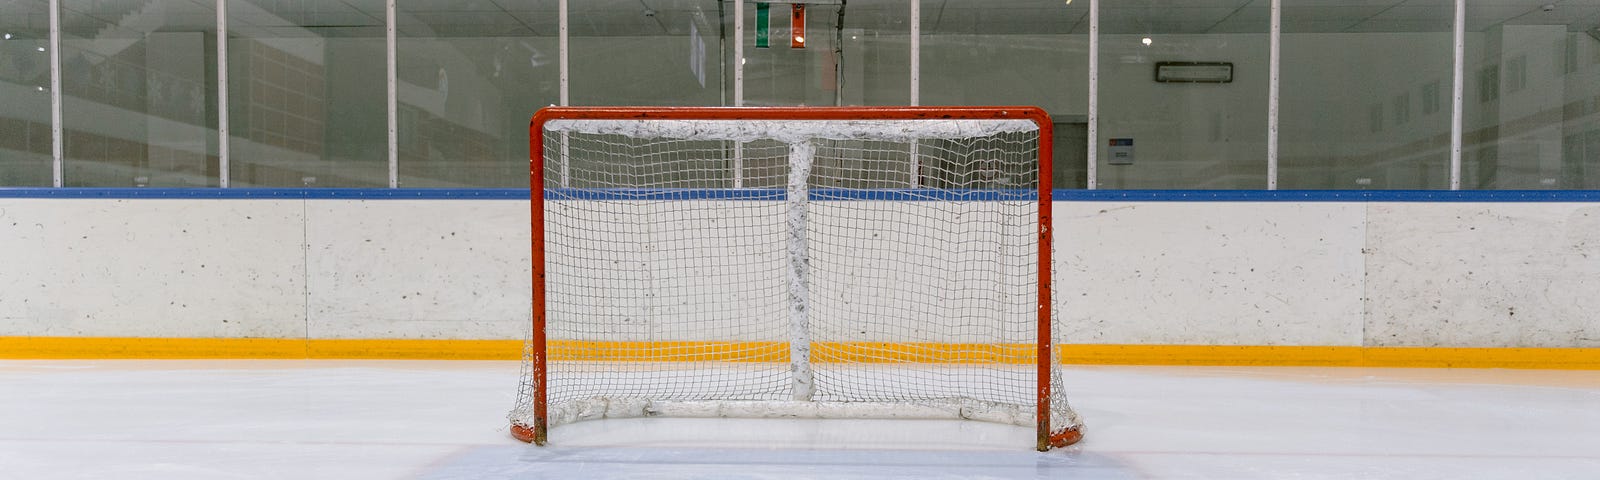 A hockey net on a sheet of ice.